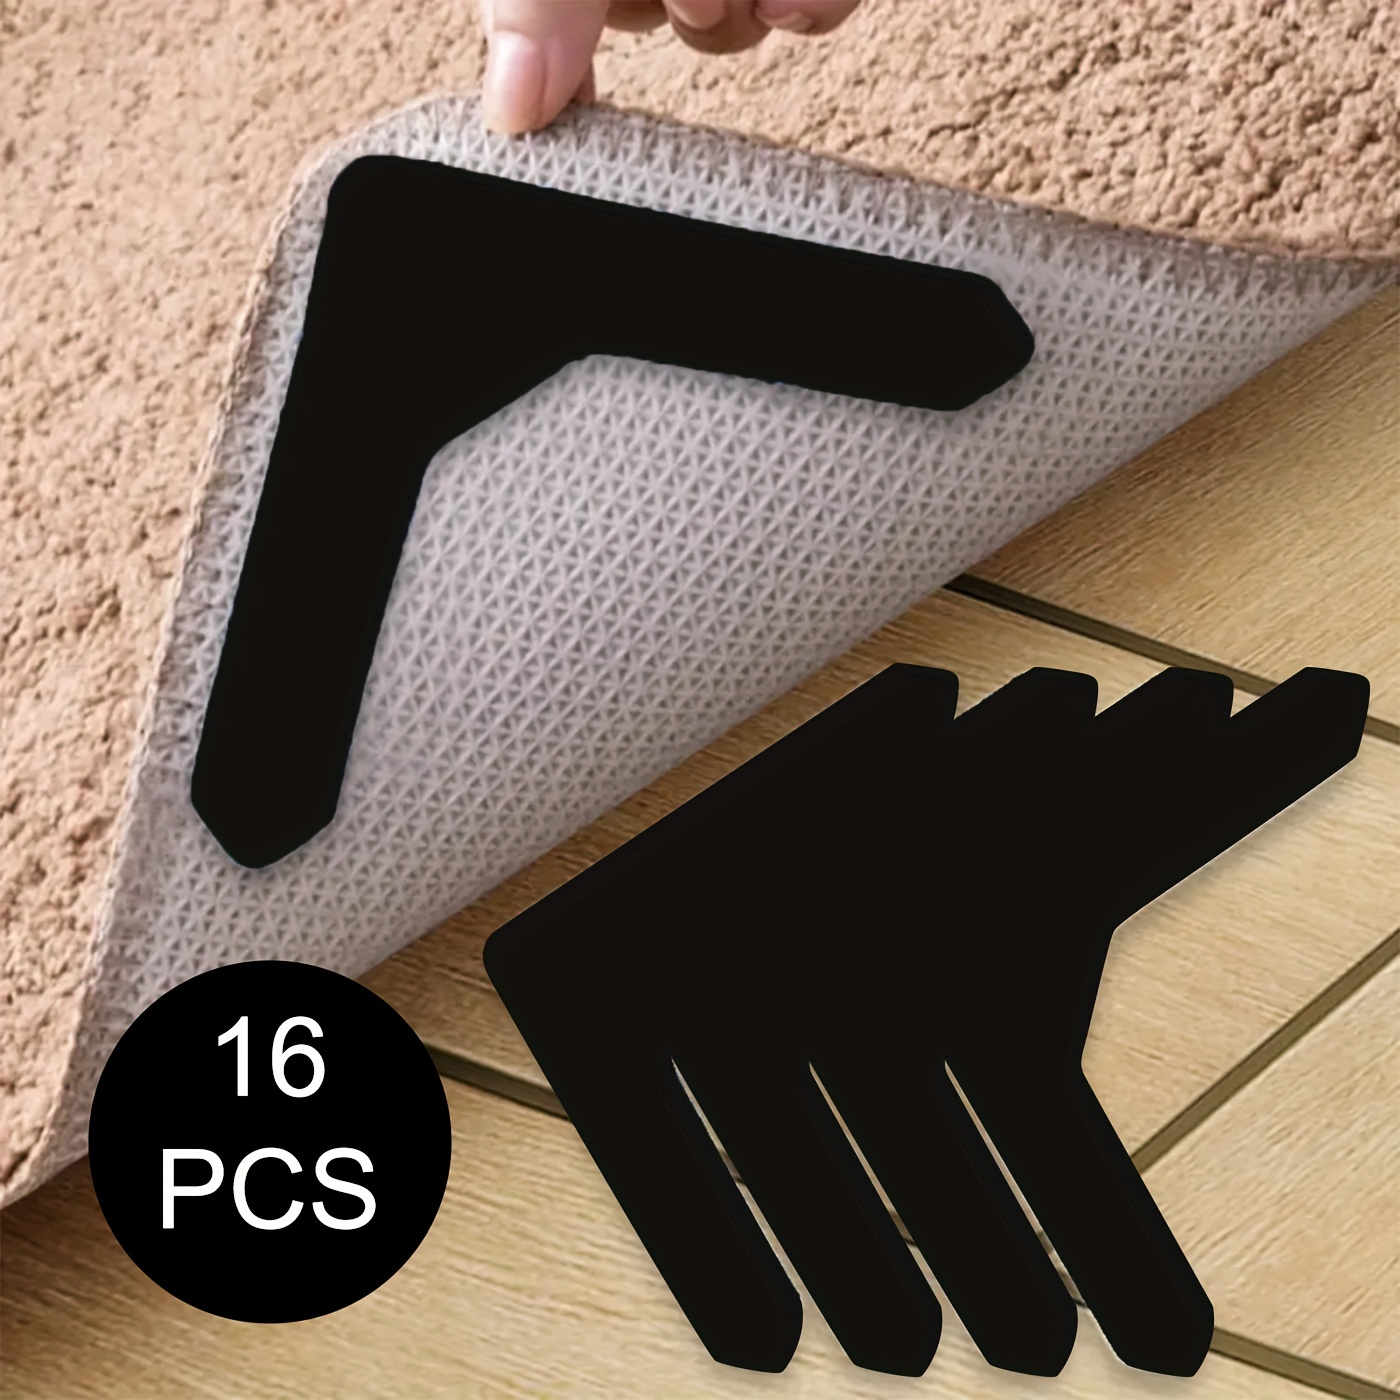  Rug Tape Carpet Corner Grippers: 10 PCS Non Slip Rug